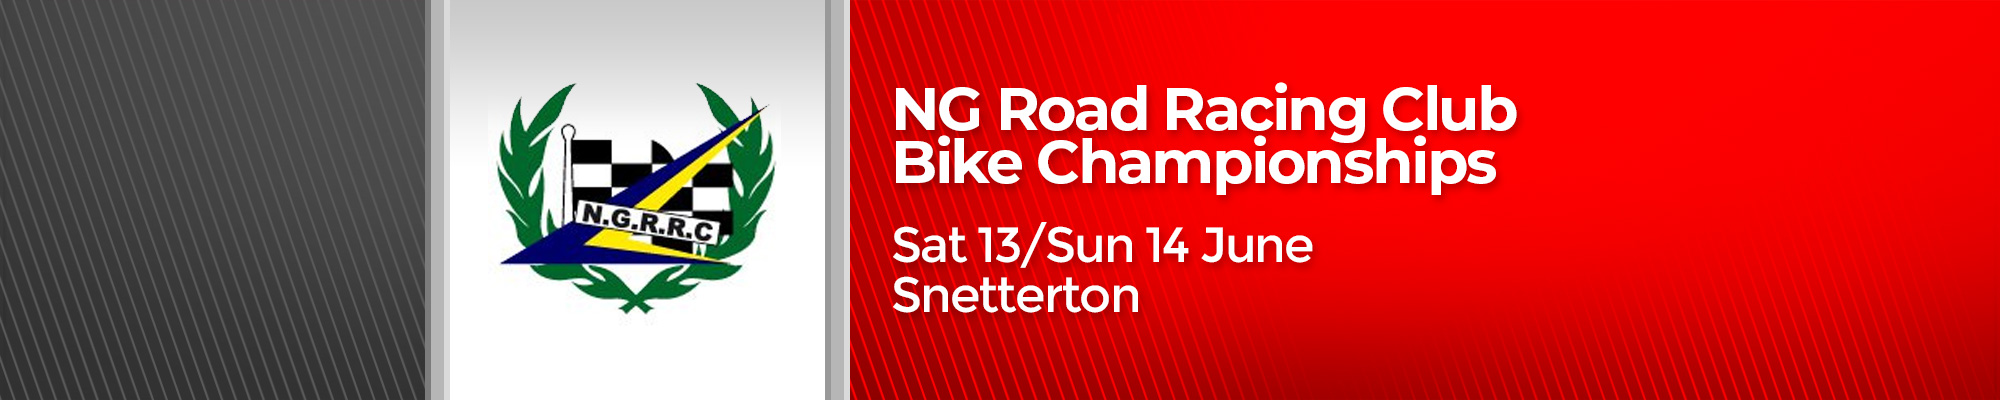  NG Road Racing Bike Club Championships - POSTPONED